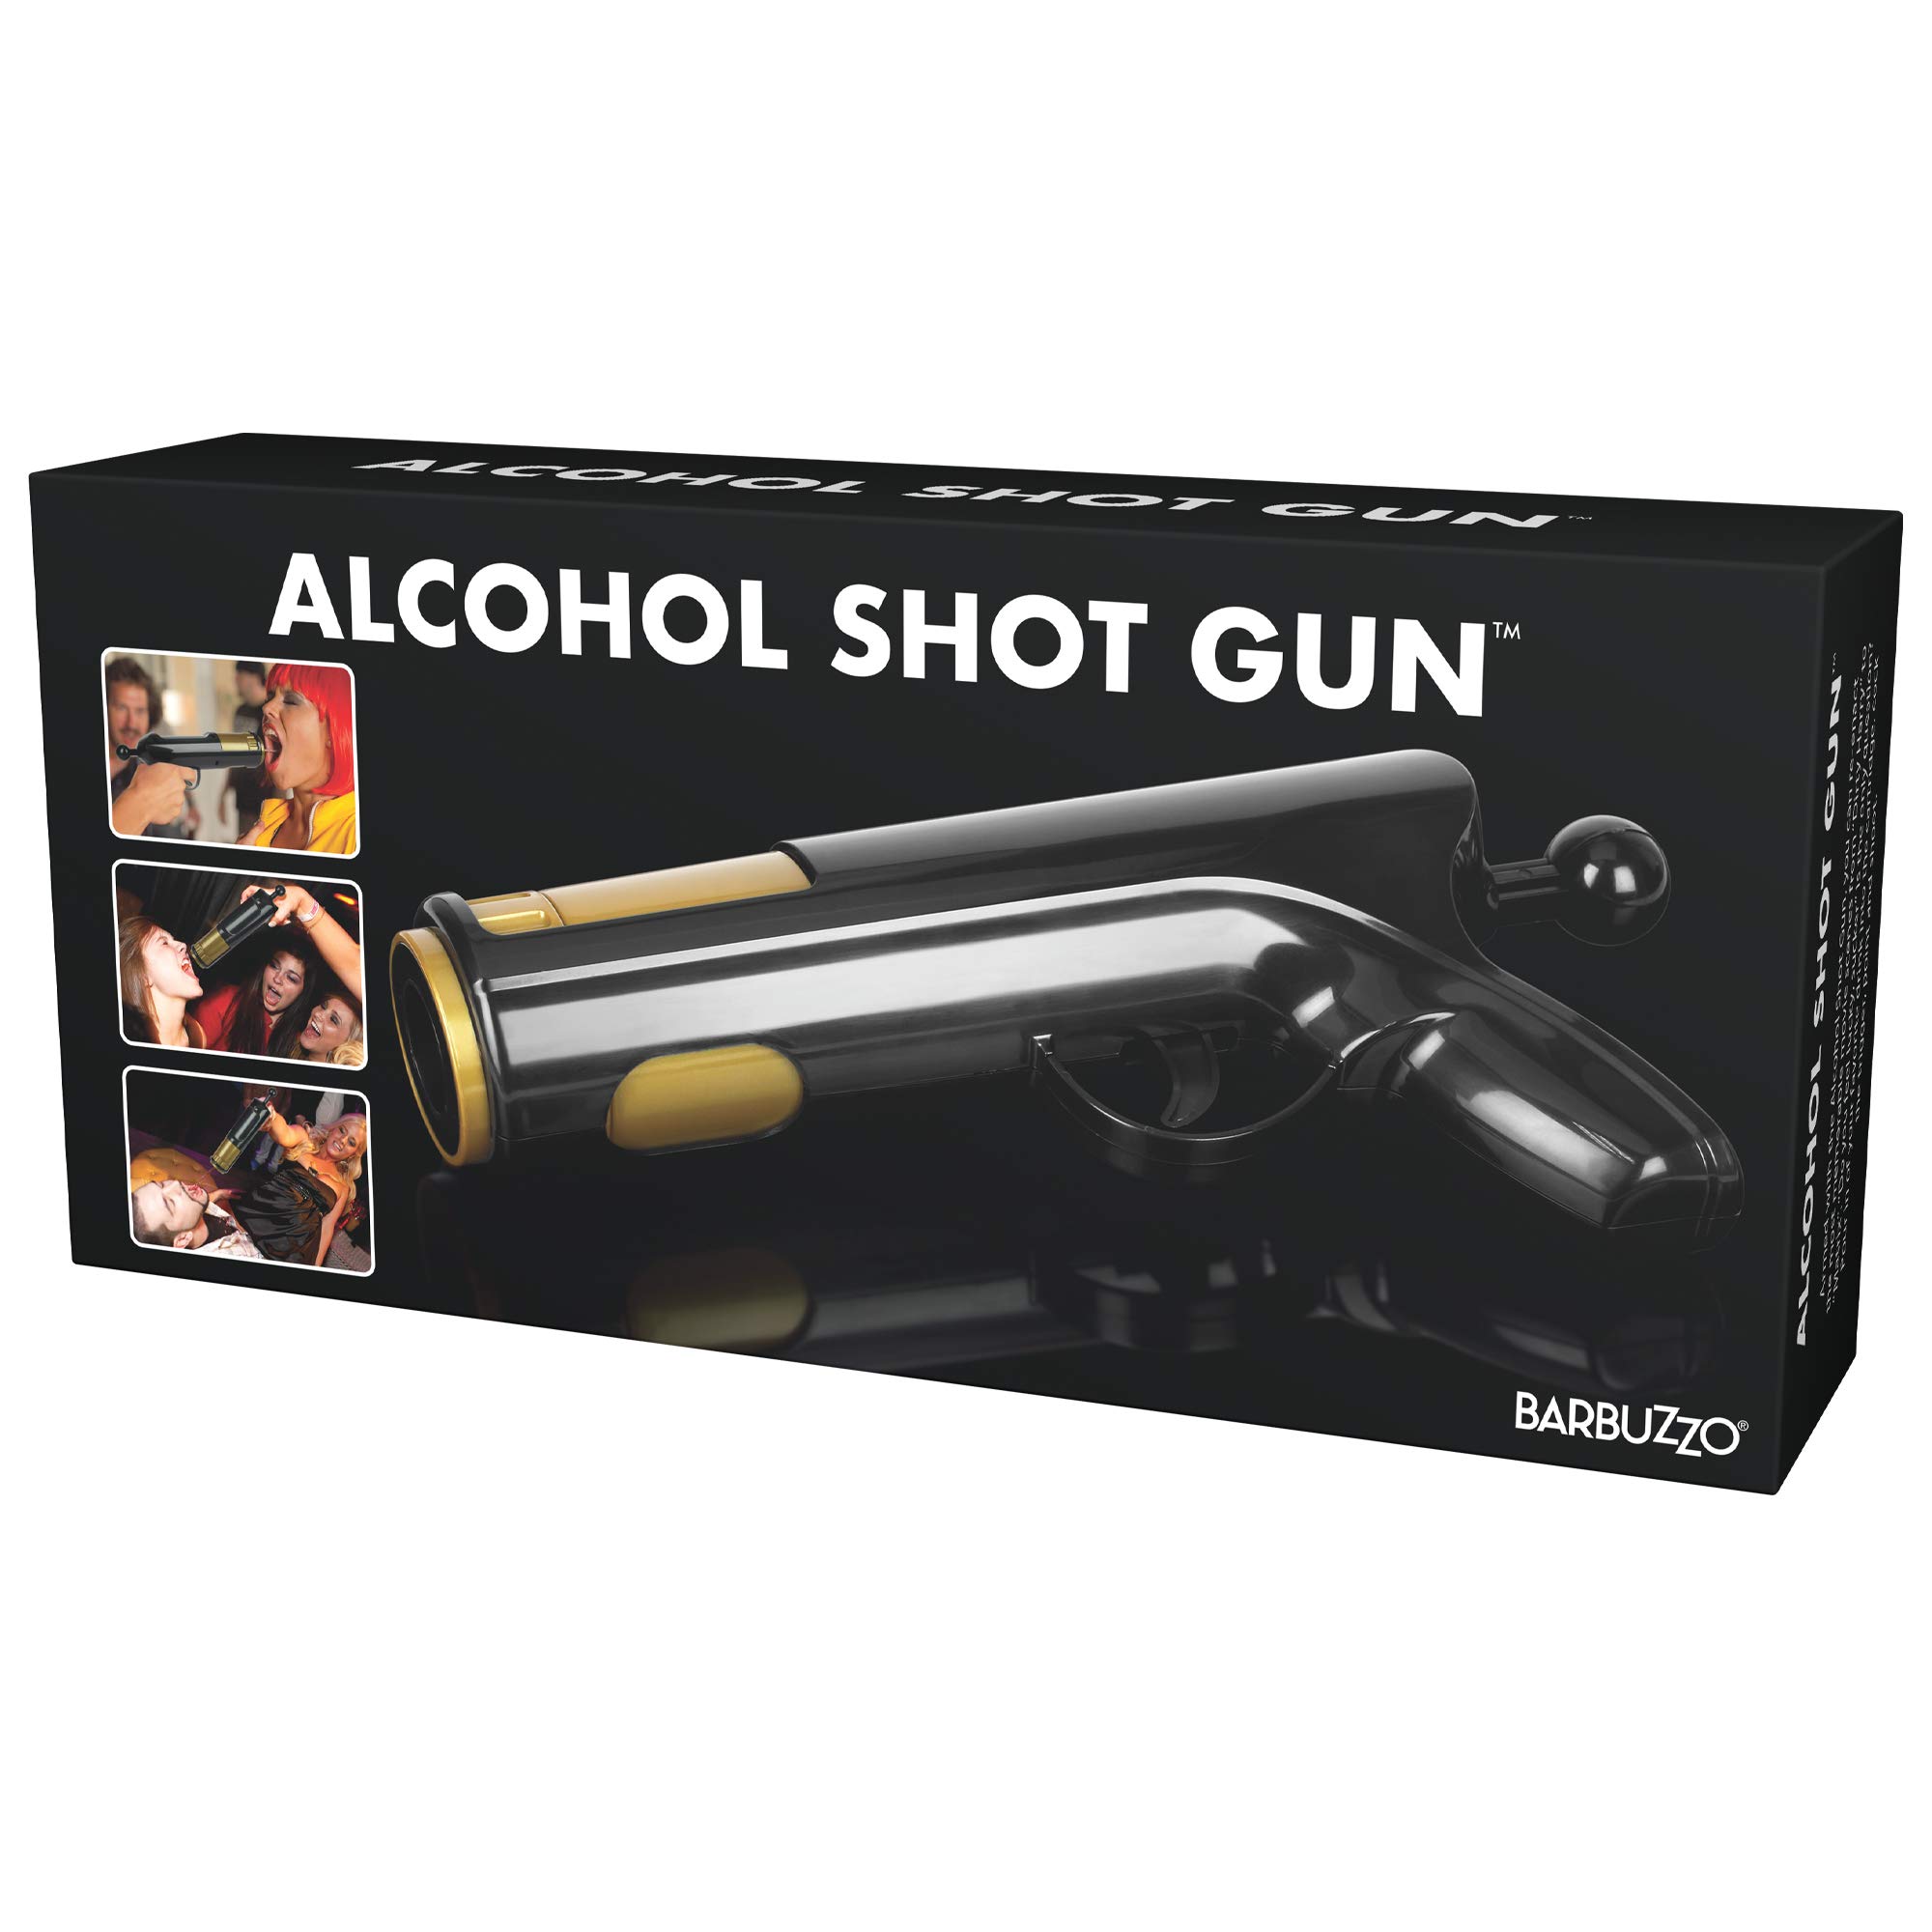 Alcohol Shot Gun - Load Your Favorite Alcohol, Aim, Shoot and